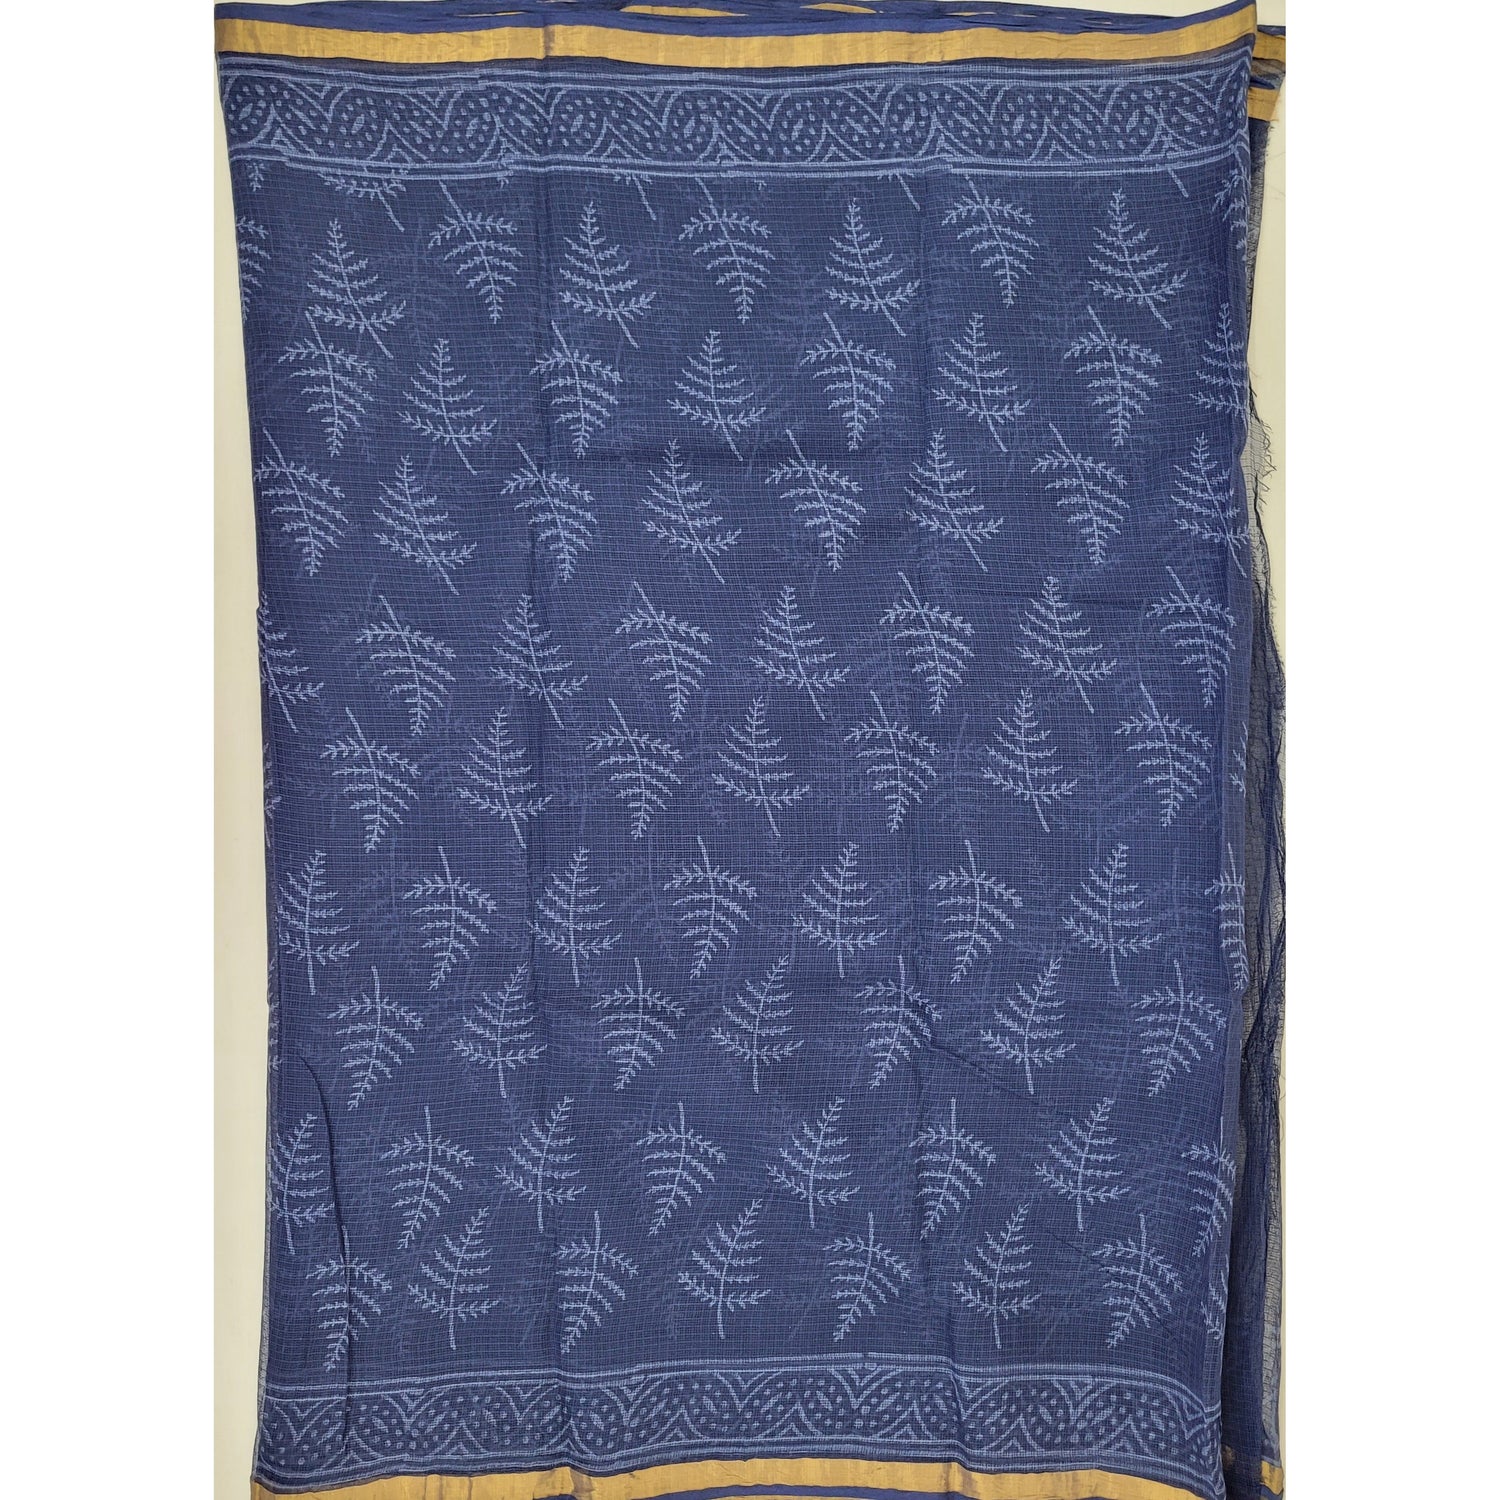 Indigo Blue color Hand Block Printed Kota Cotton Saree with Zari border - Vinshika